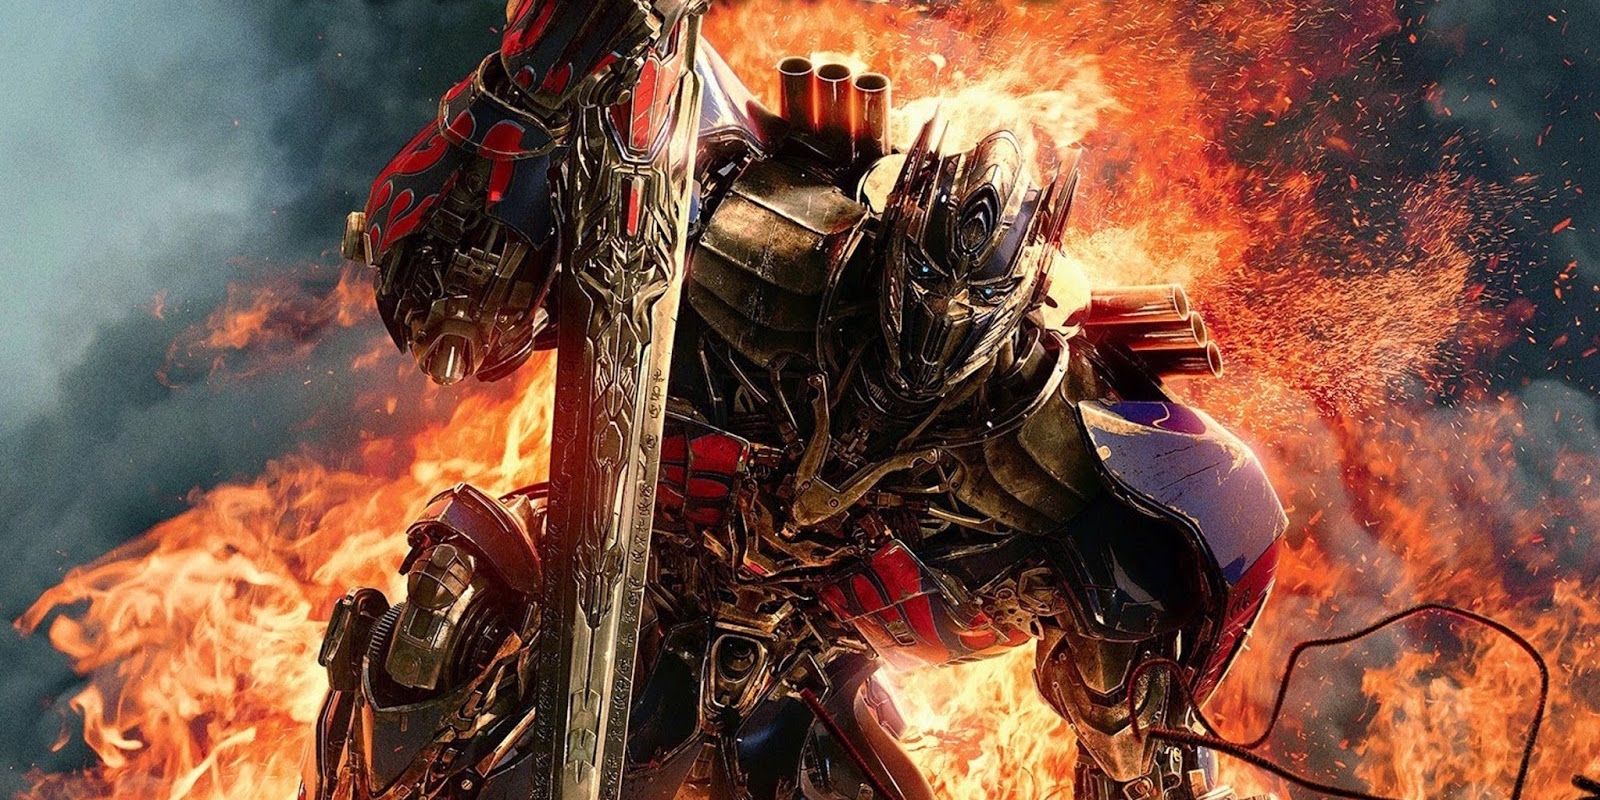 Steve Joblonsky to Score Transformers: The Last Knight